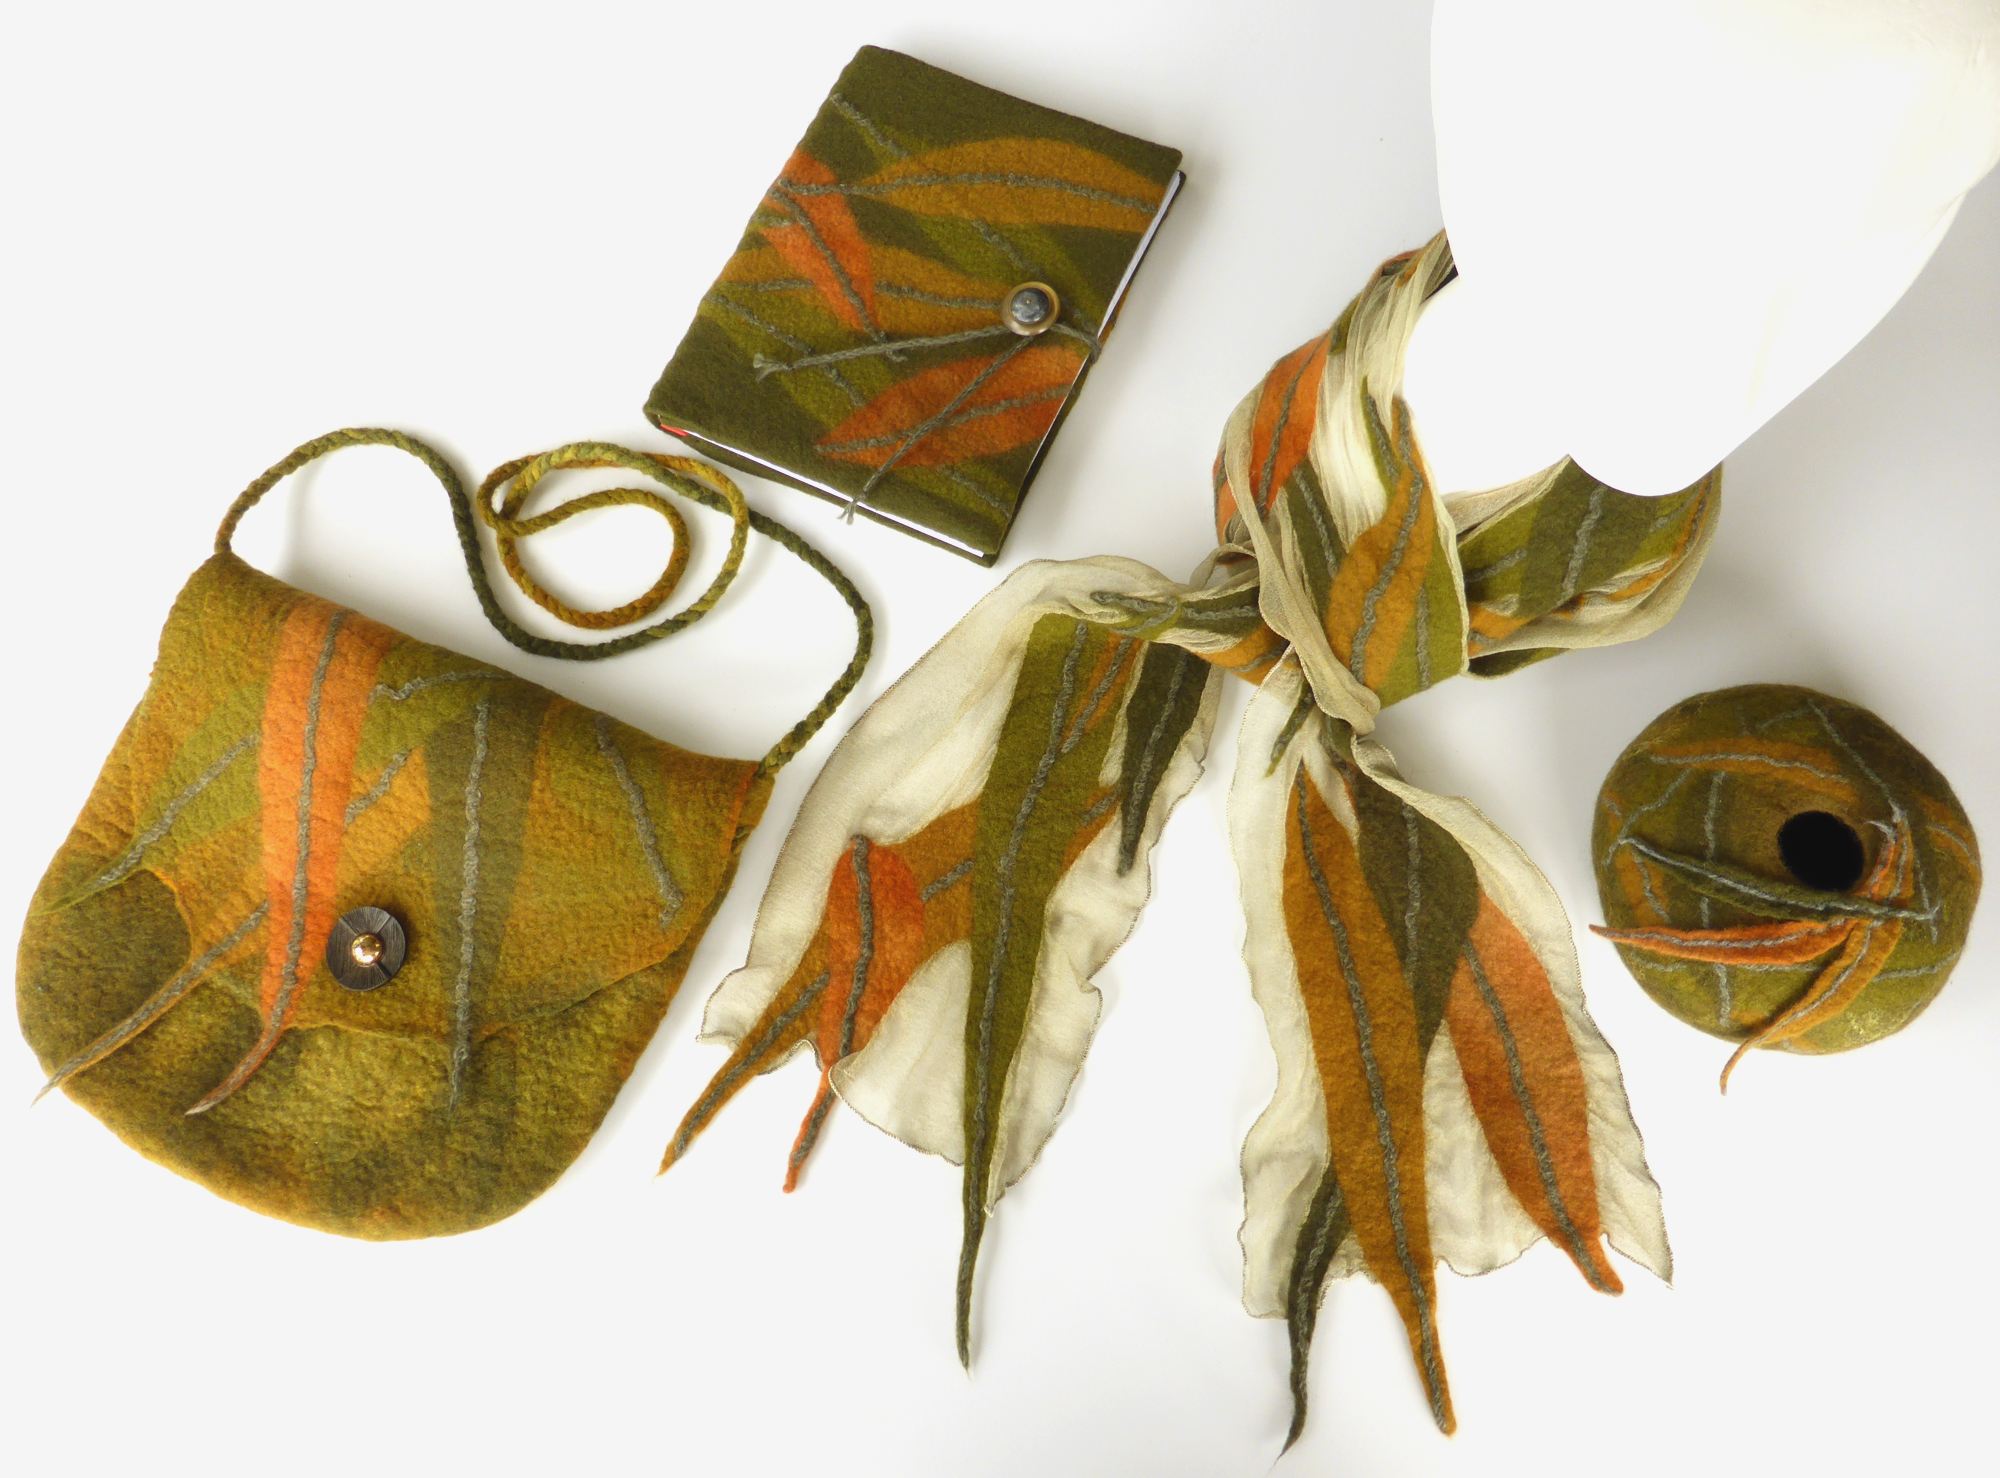 Eucalyptus leaves felt series - scarf, bag and book (2016) by Andrea McCallum